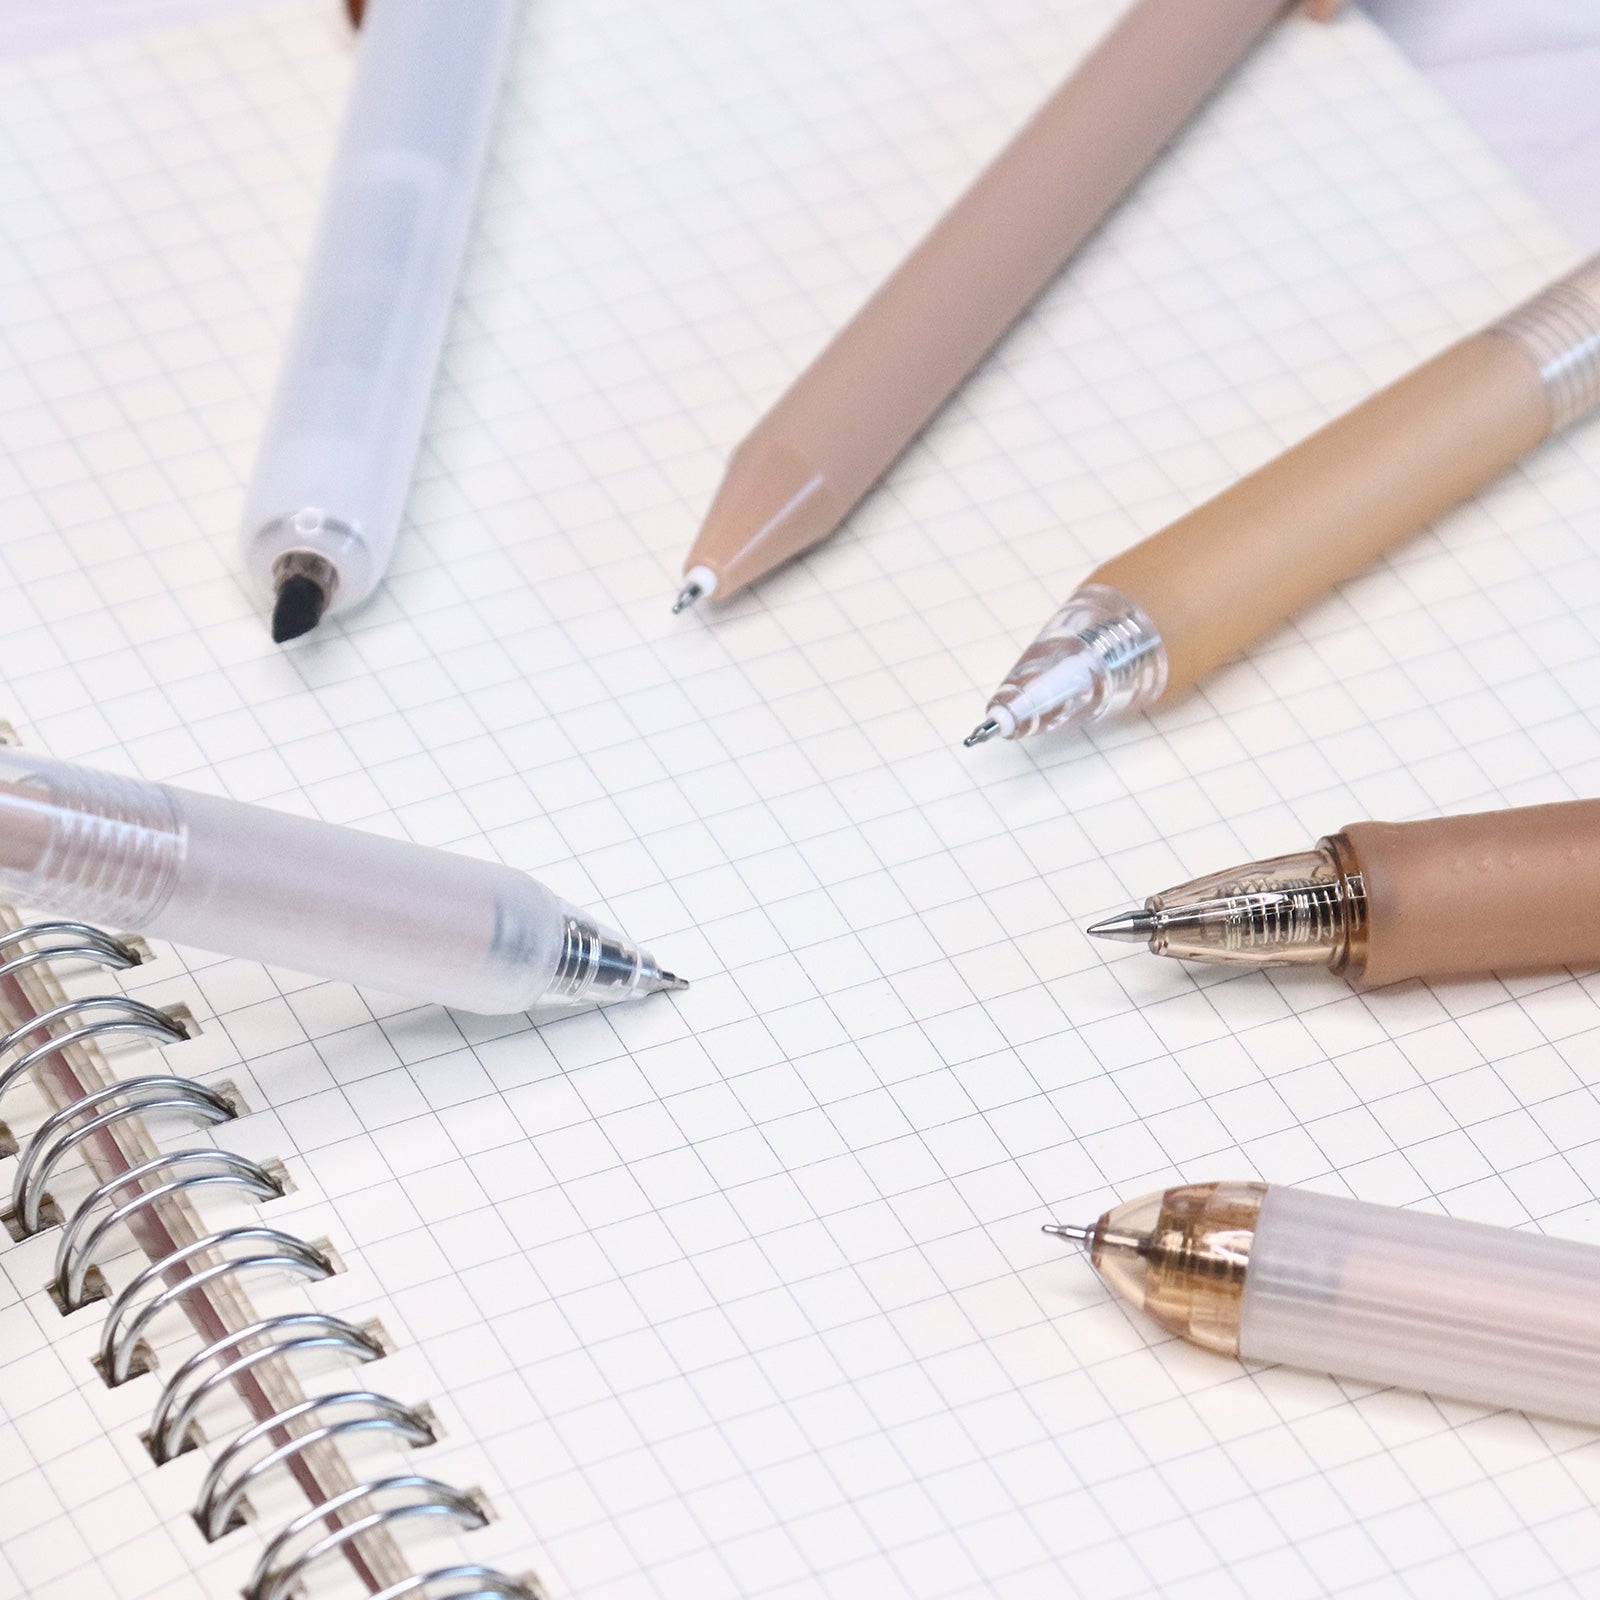 6PCS Cream Latte Gel Pen Set – MultiBey - For Your Fashion Office